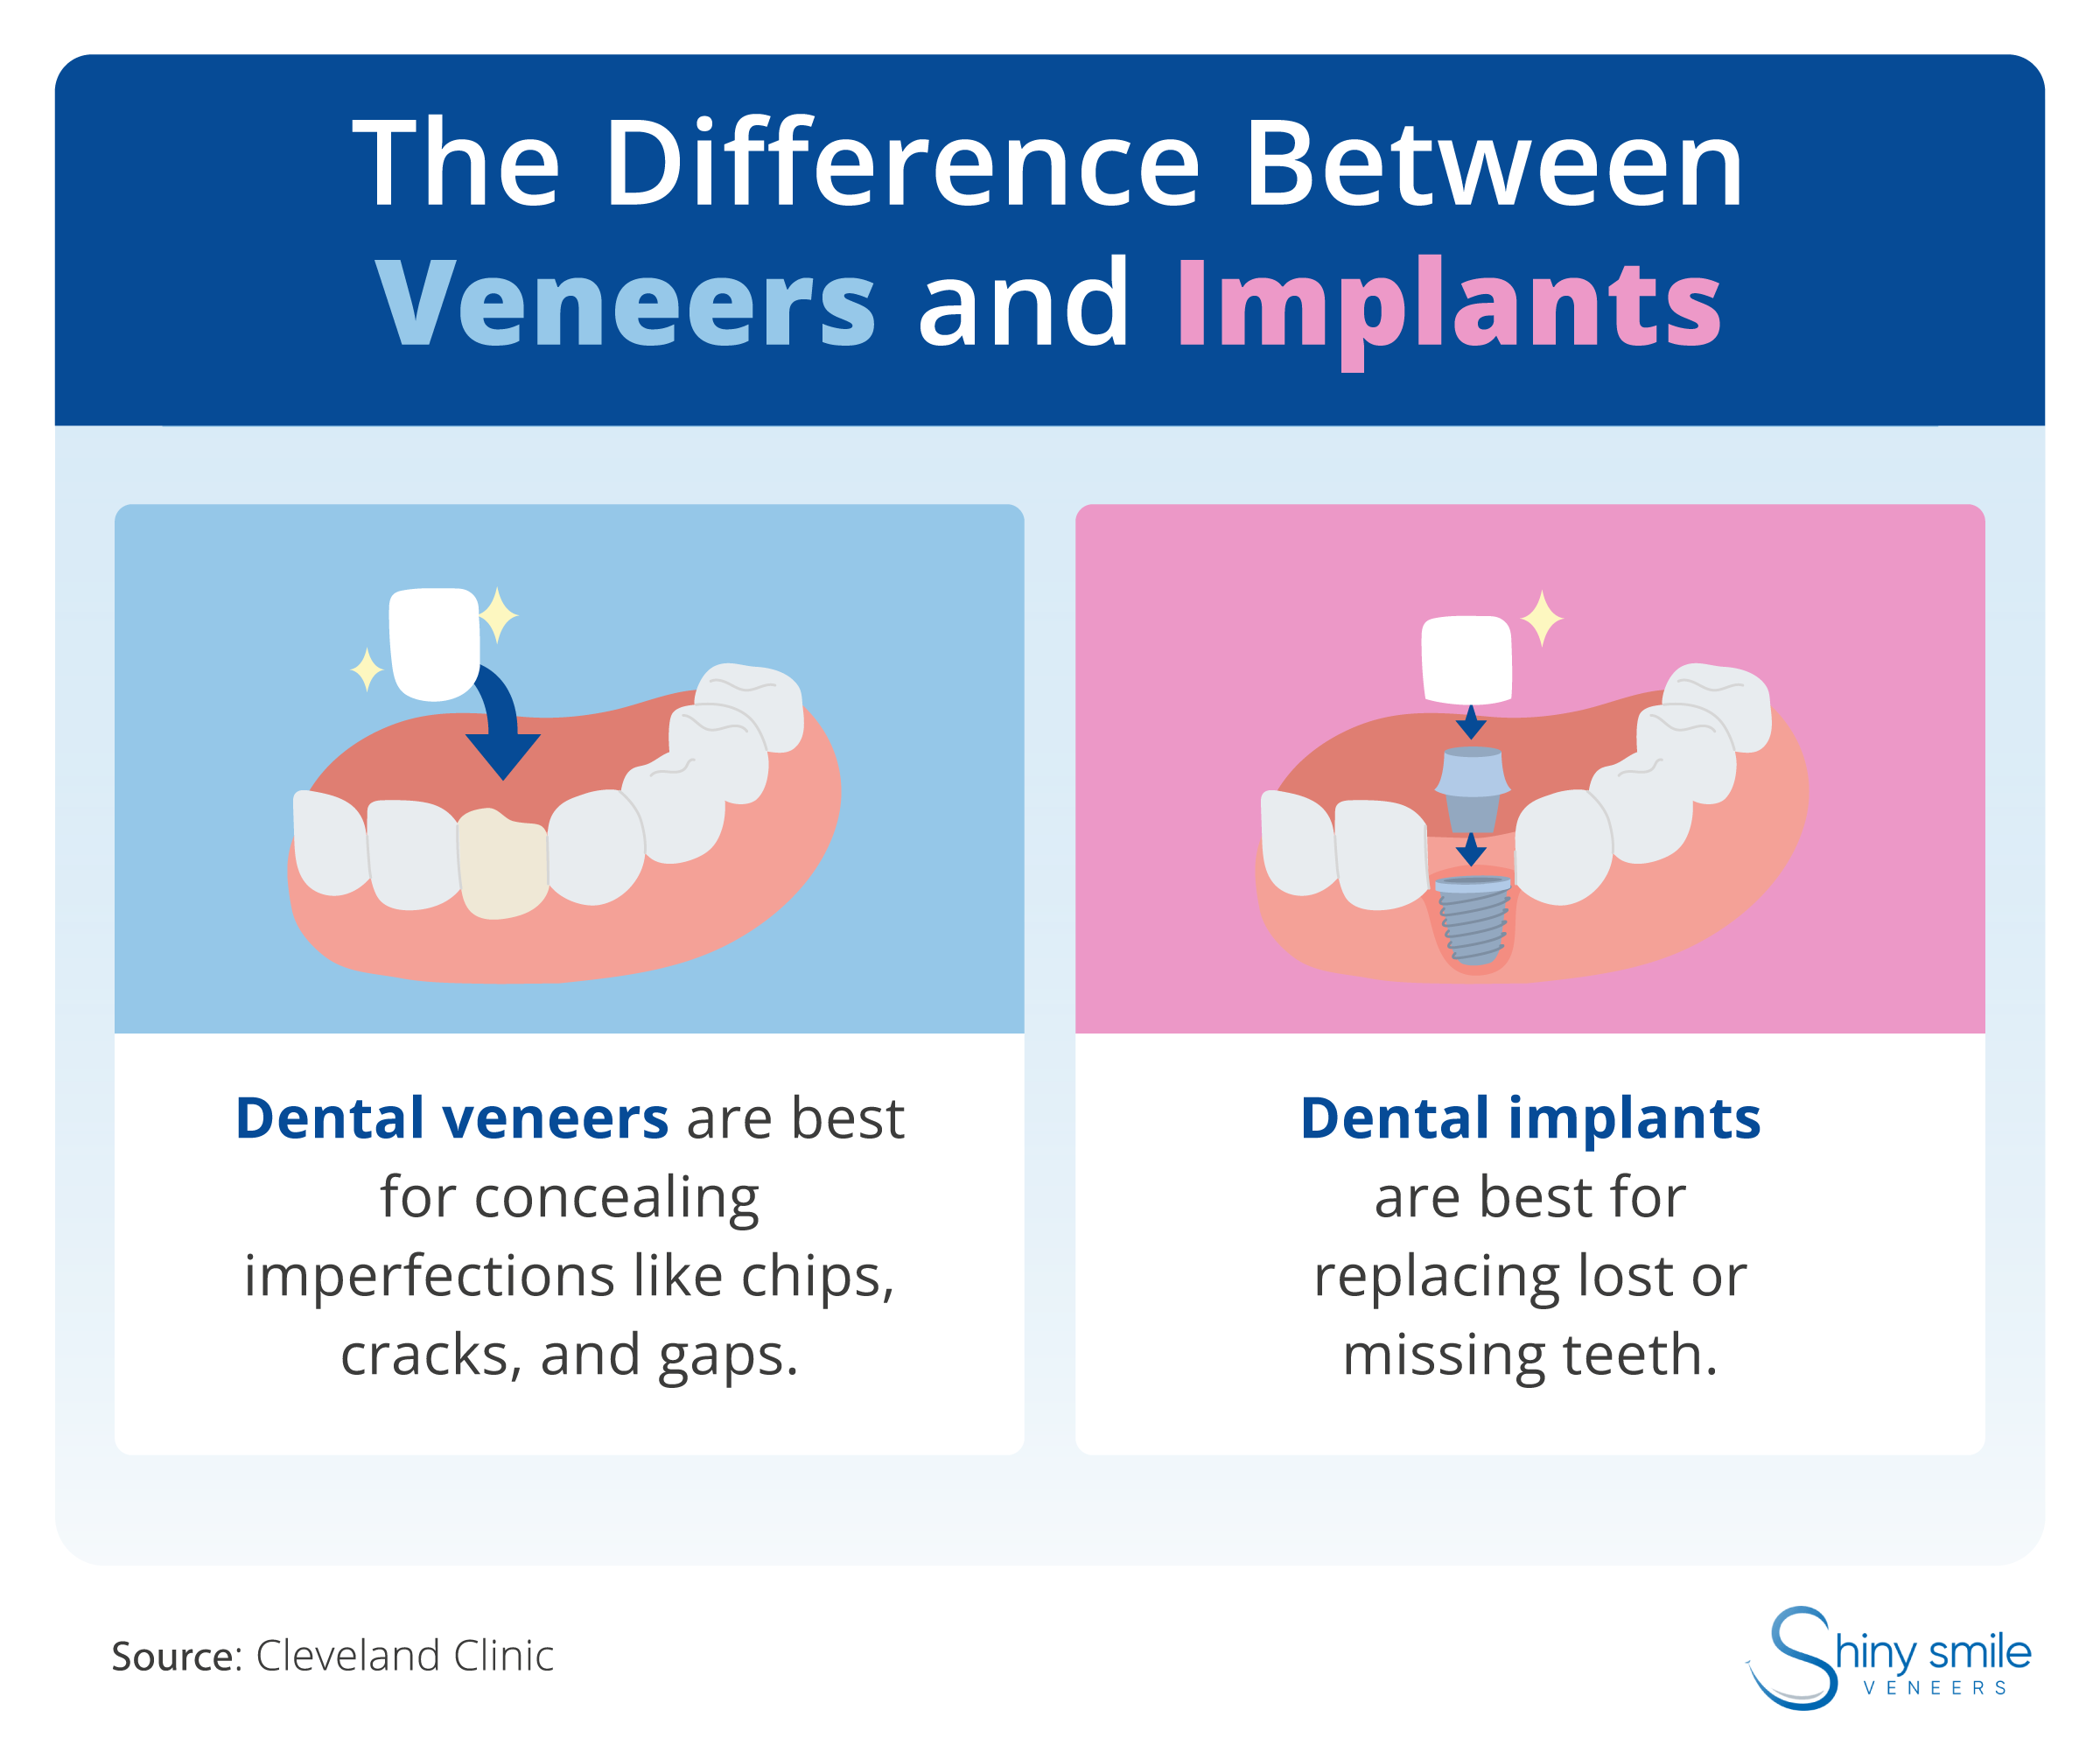 A breakdown of the difference between dental veneers and implants